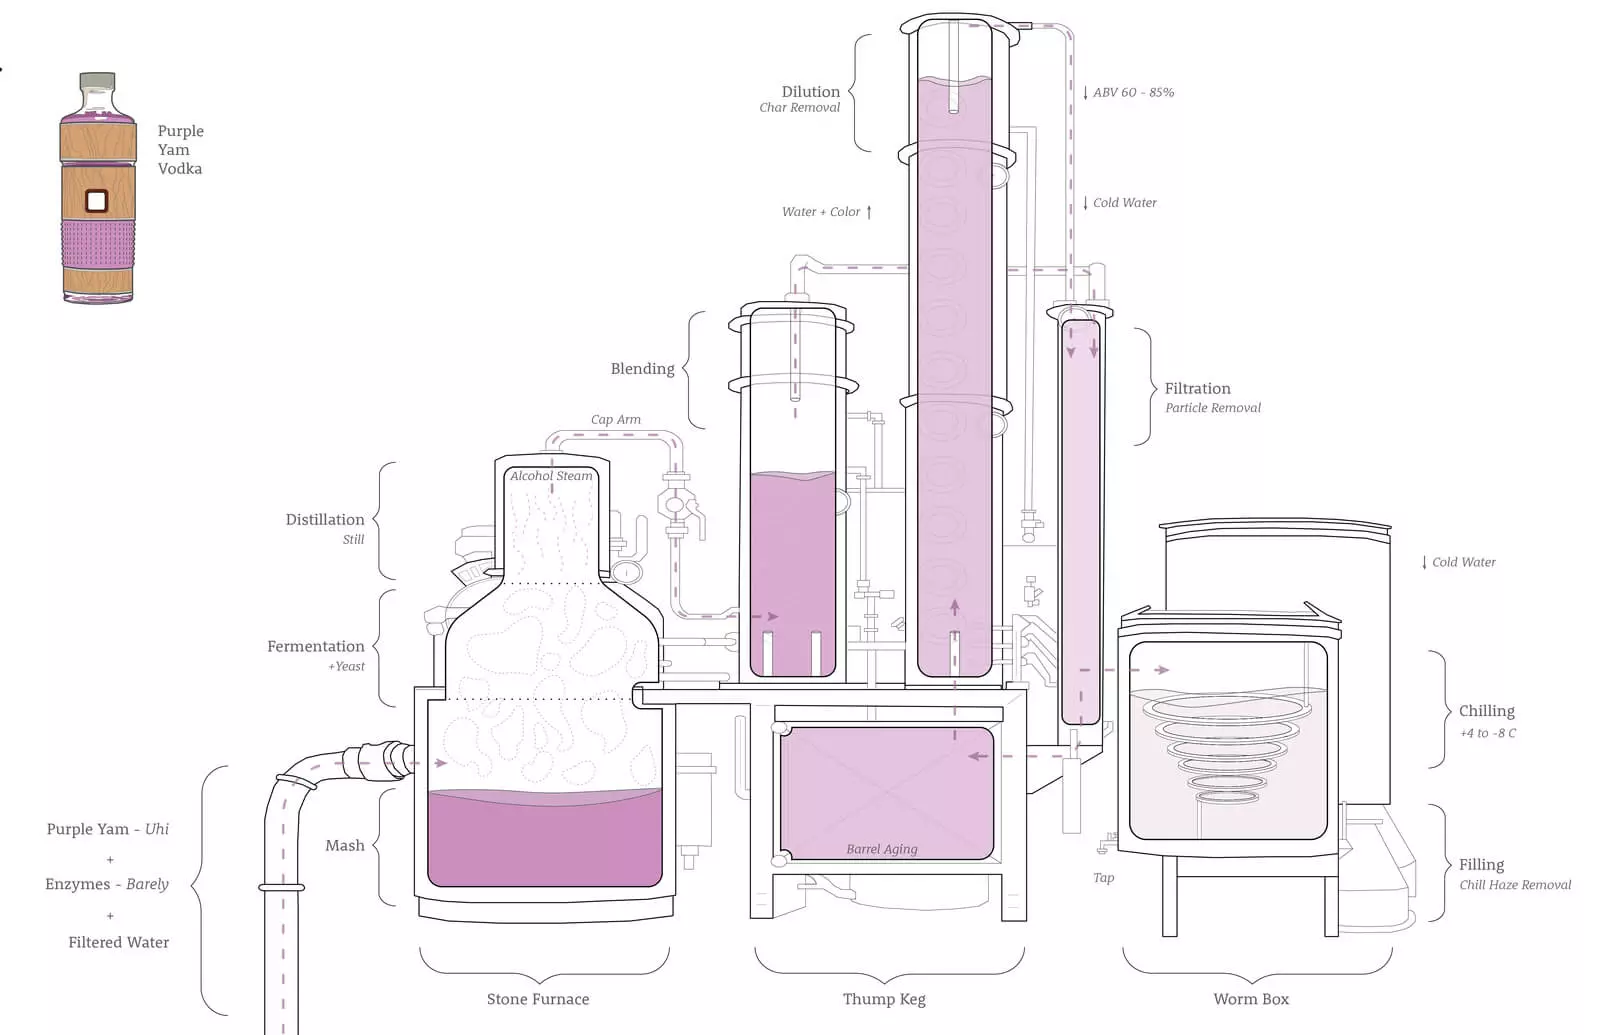 PP web student images_Chopin Gaschen_02 Distillation Process